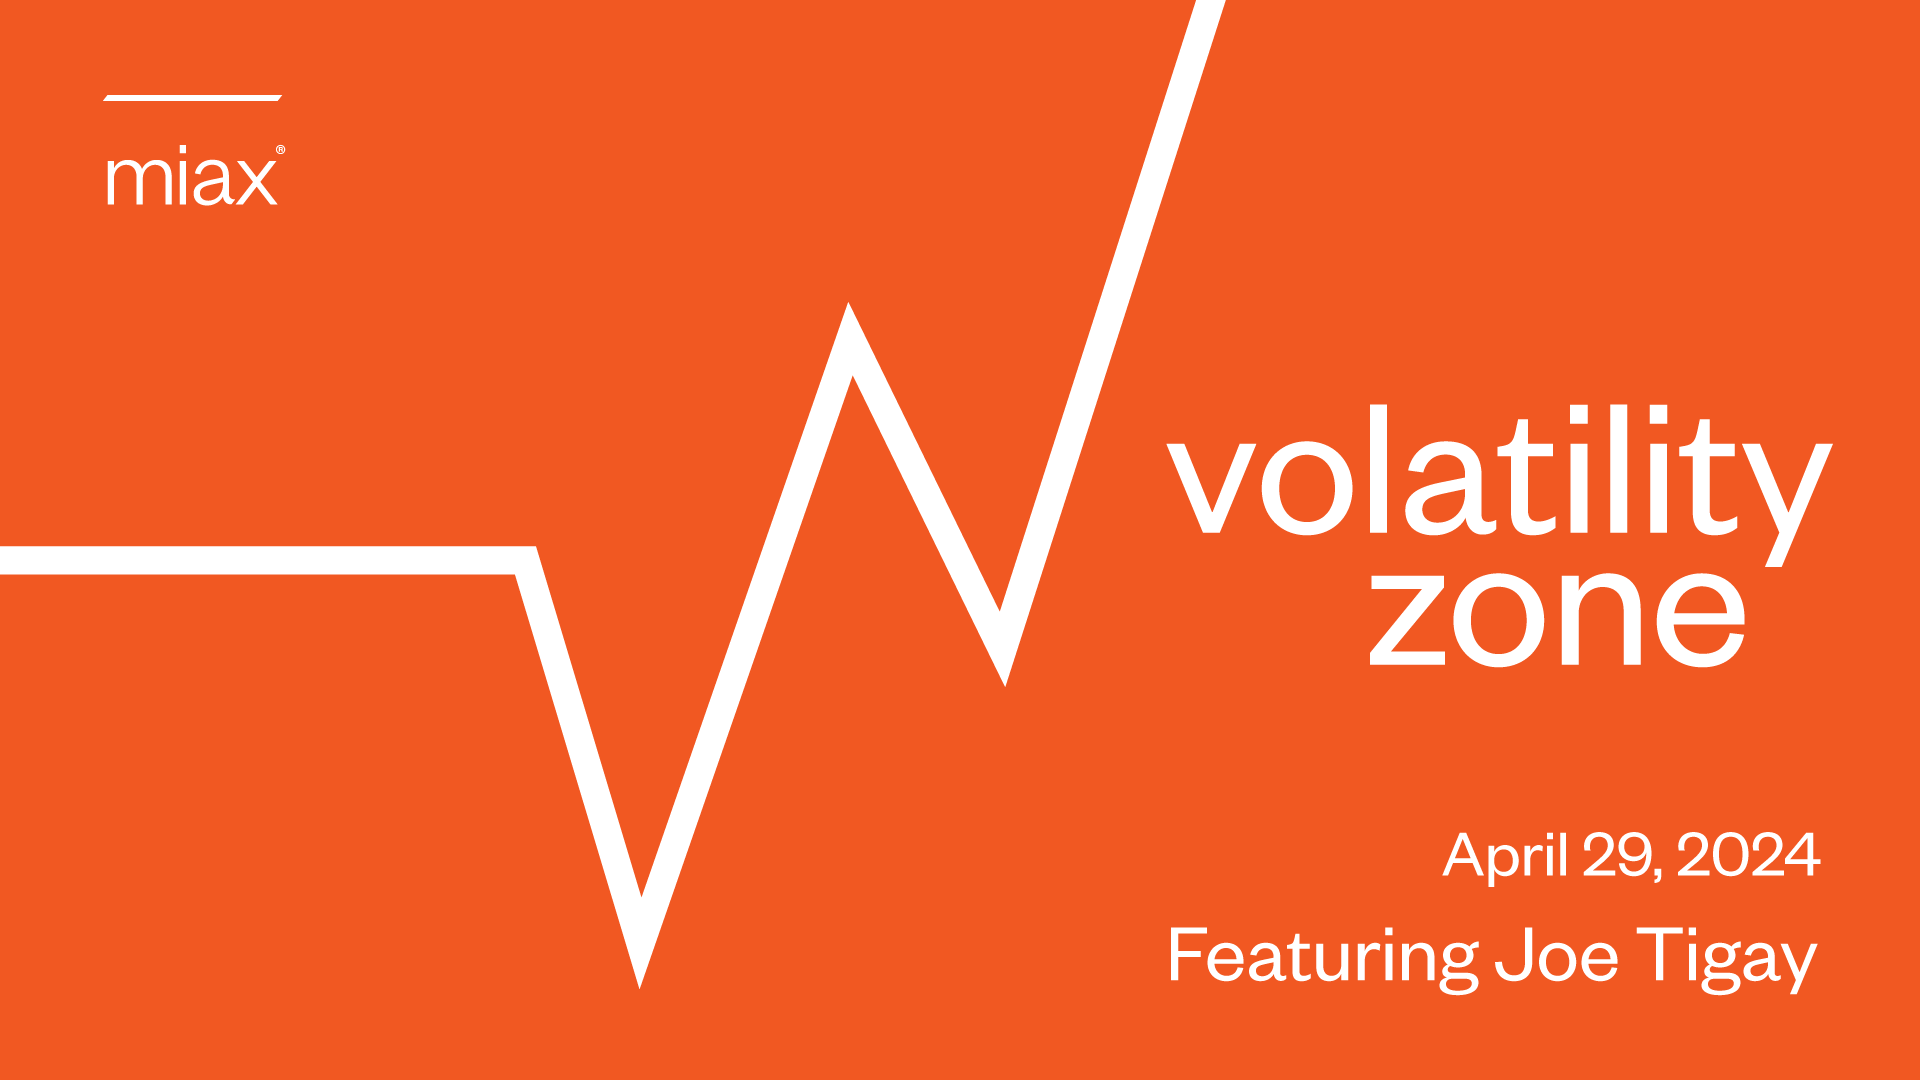 MIAX Volatility Zone April 29, 2024